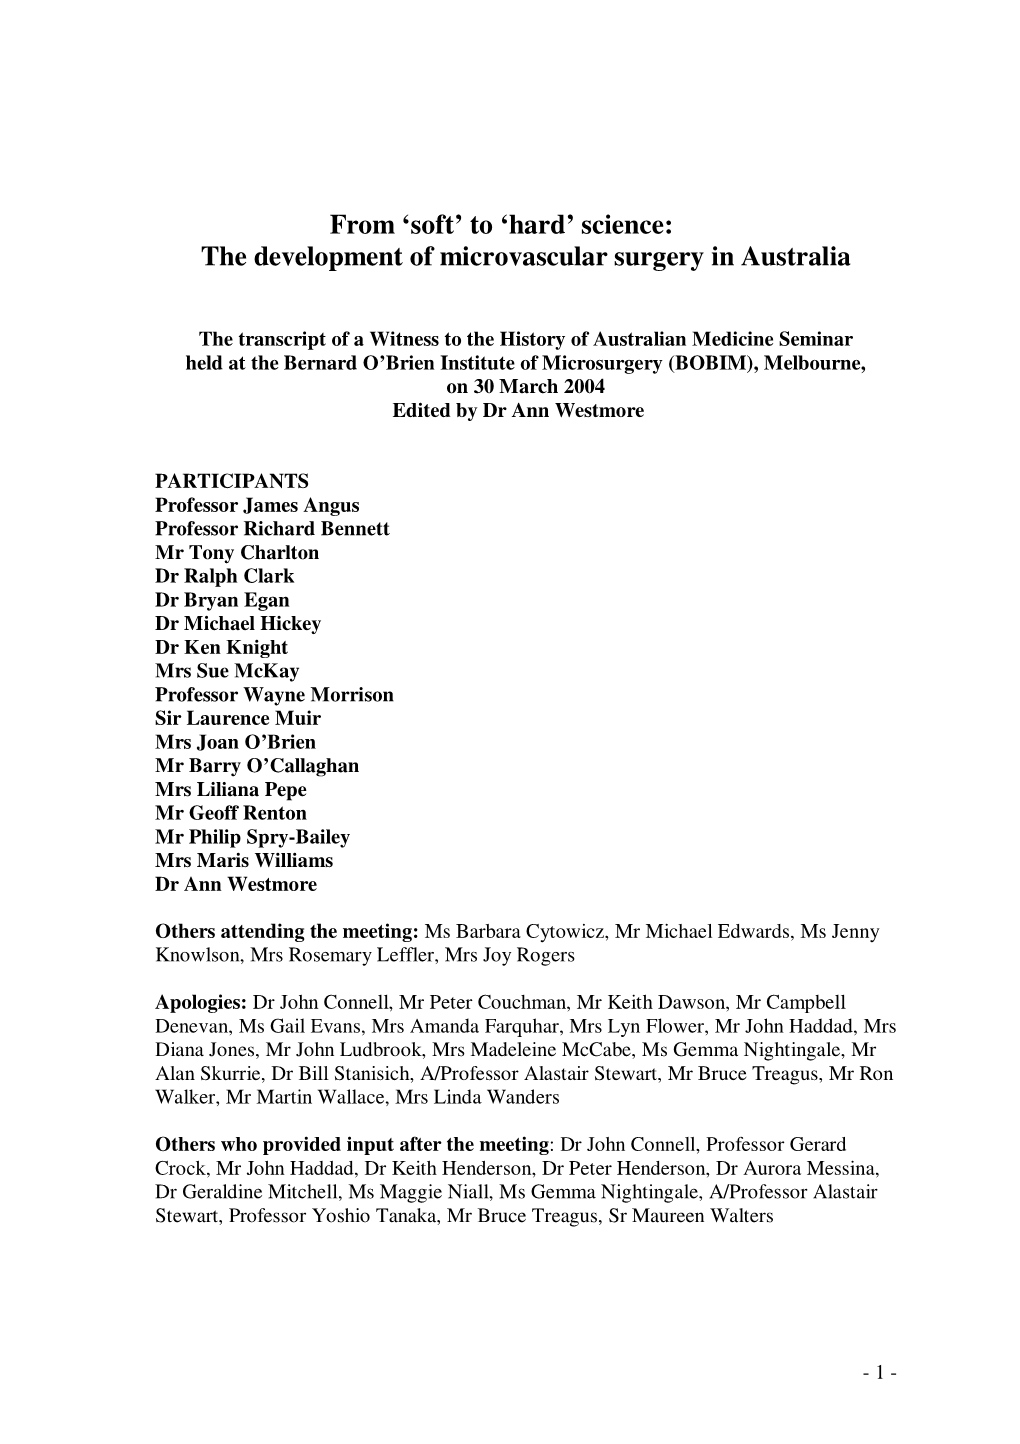 The Development of Microvascular Surgery in Australia